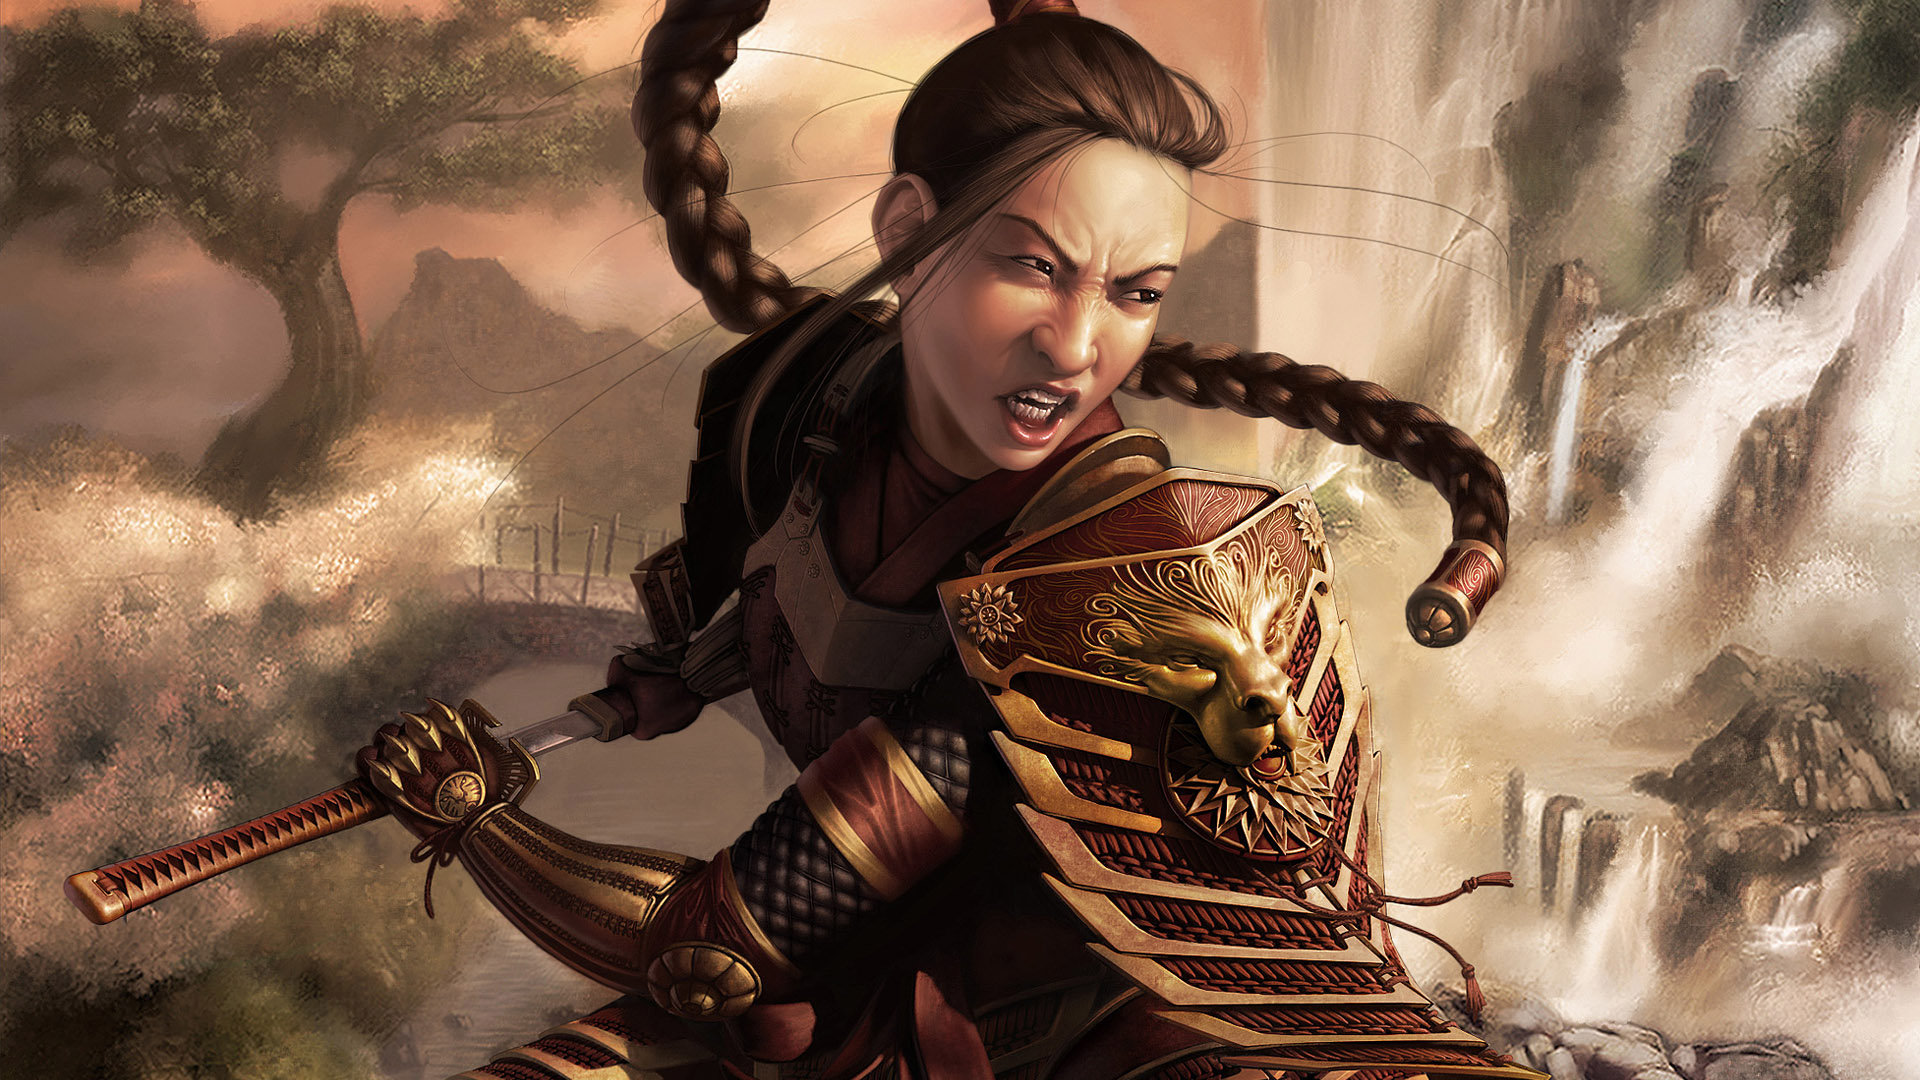 Women Fighters In Reasonable Armor Samurai Girl Warrior Faction